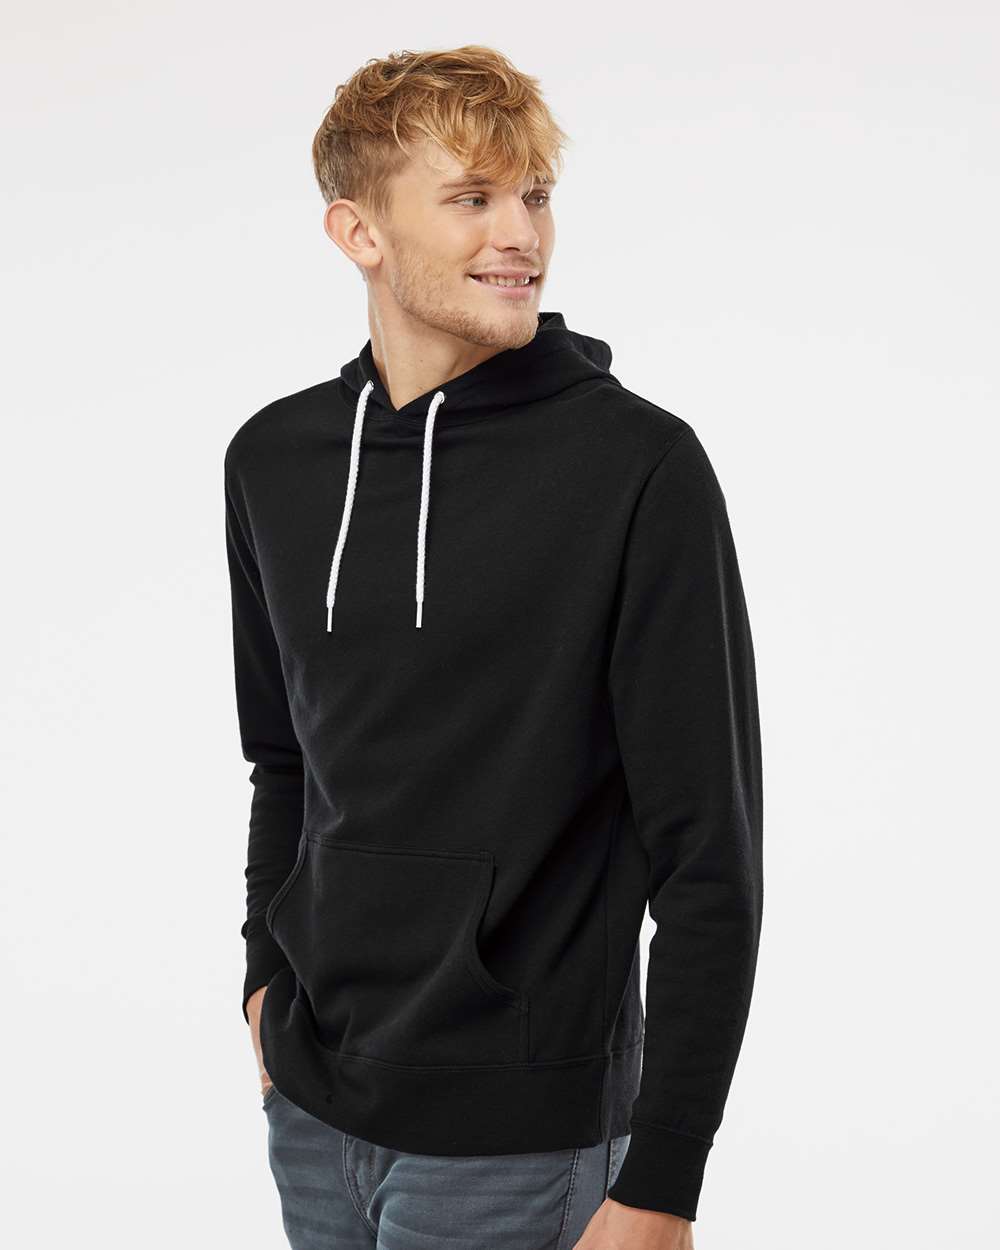 Independent Trading Co. AFX90UN - Lightweight Hooded Sweatshirt